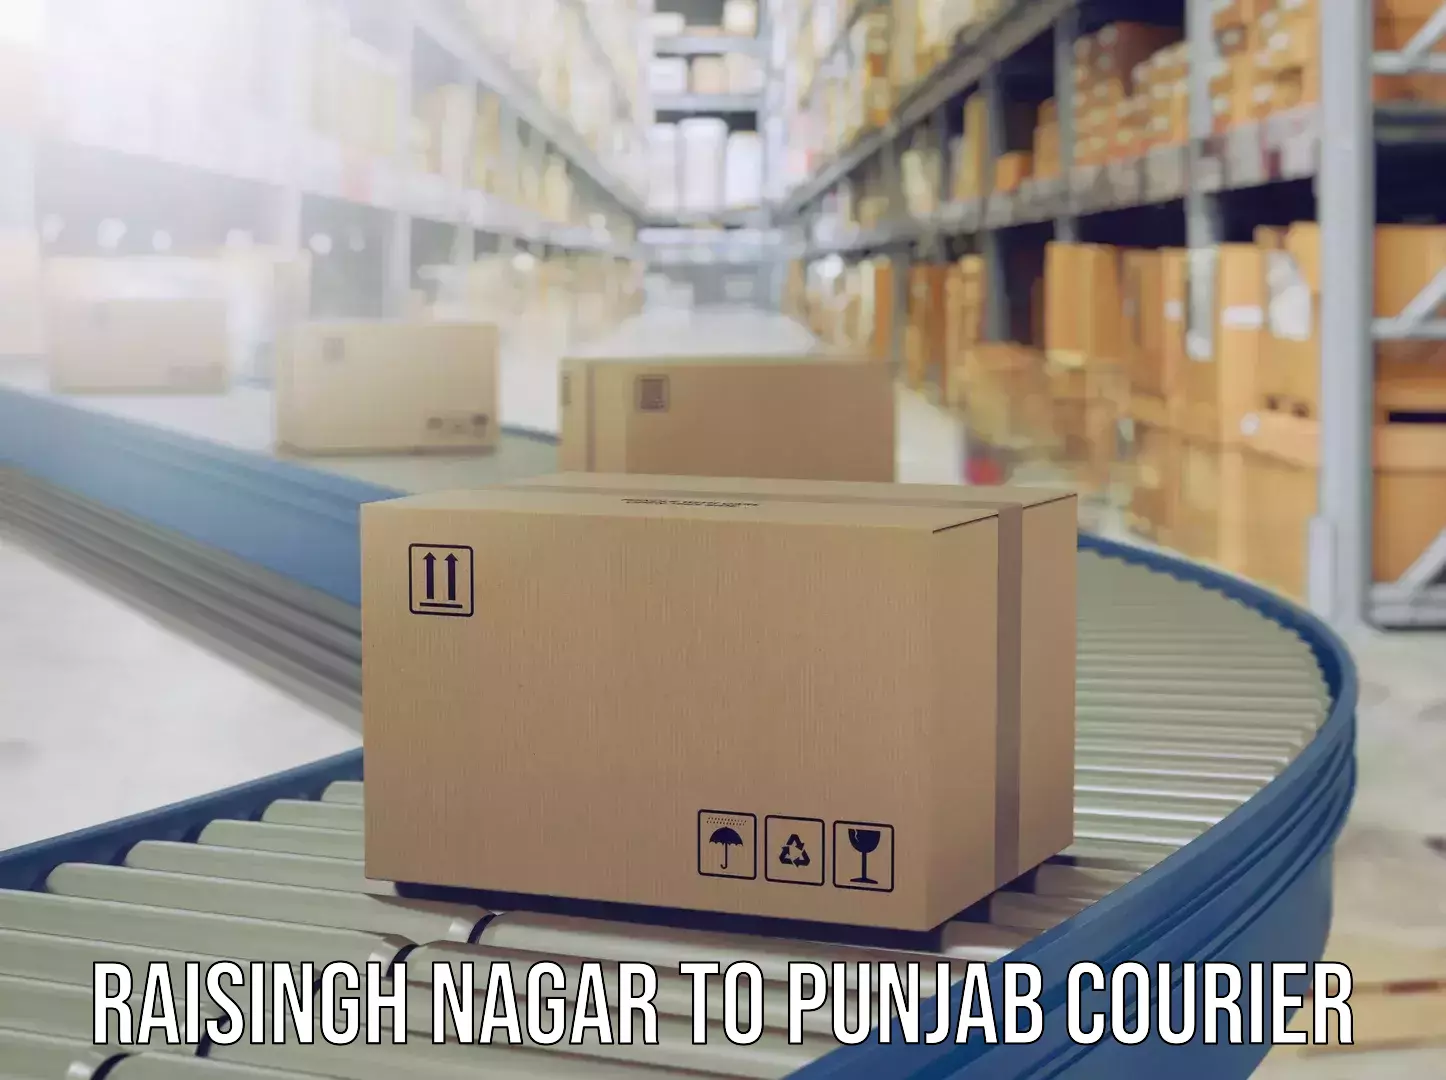 Luggage delivery optimization Raisingh Nagar to Punjab